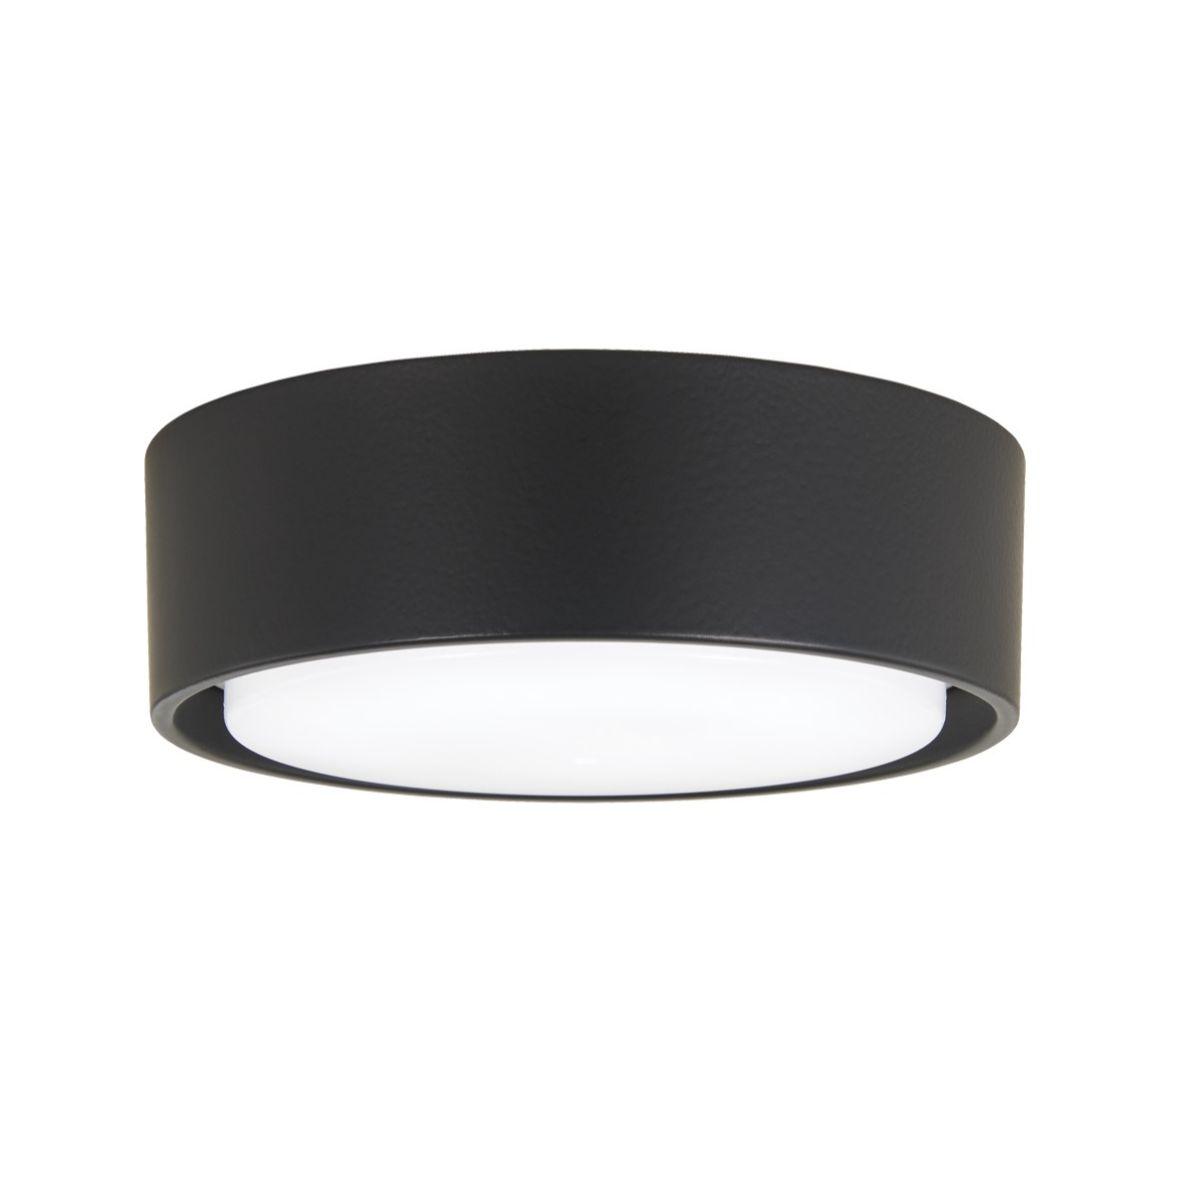 Simple LED Ceiling Fan Light Kit